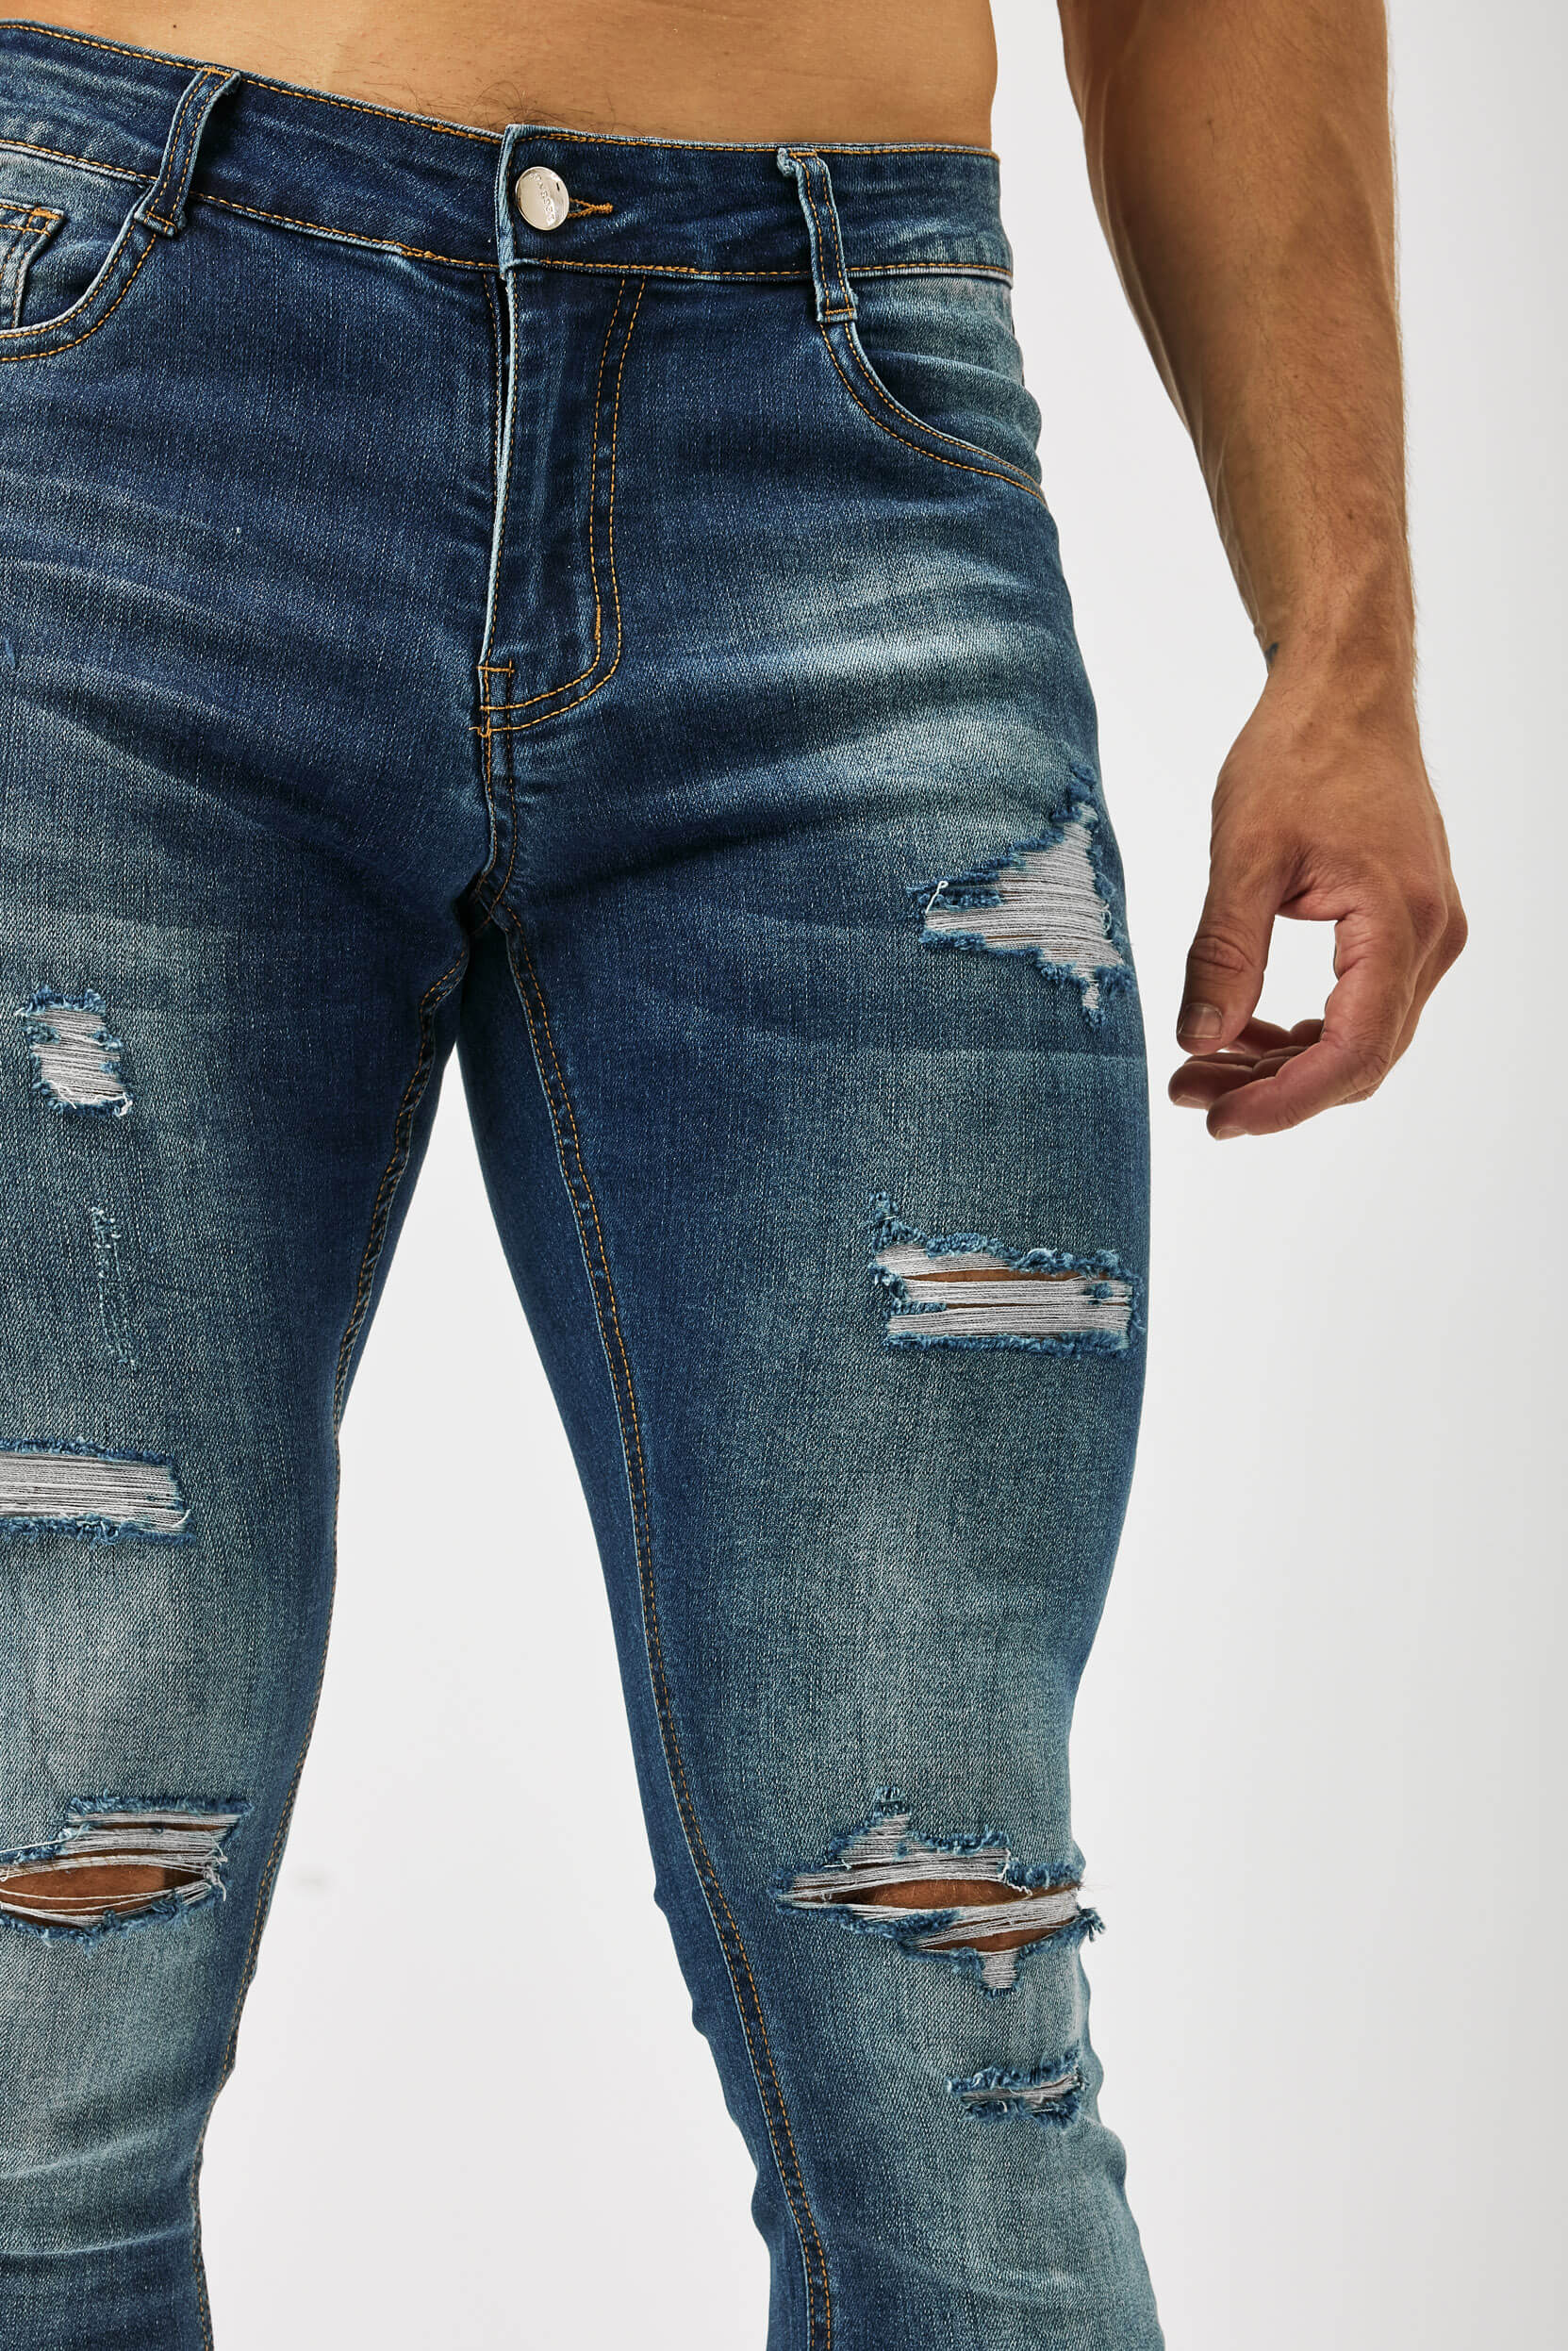 Legend London Jeans - spray on DARK WASH SPRAY - ON JEANS - MULTI RIP